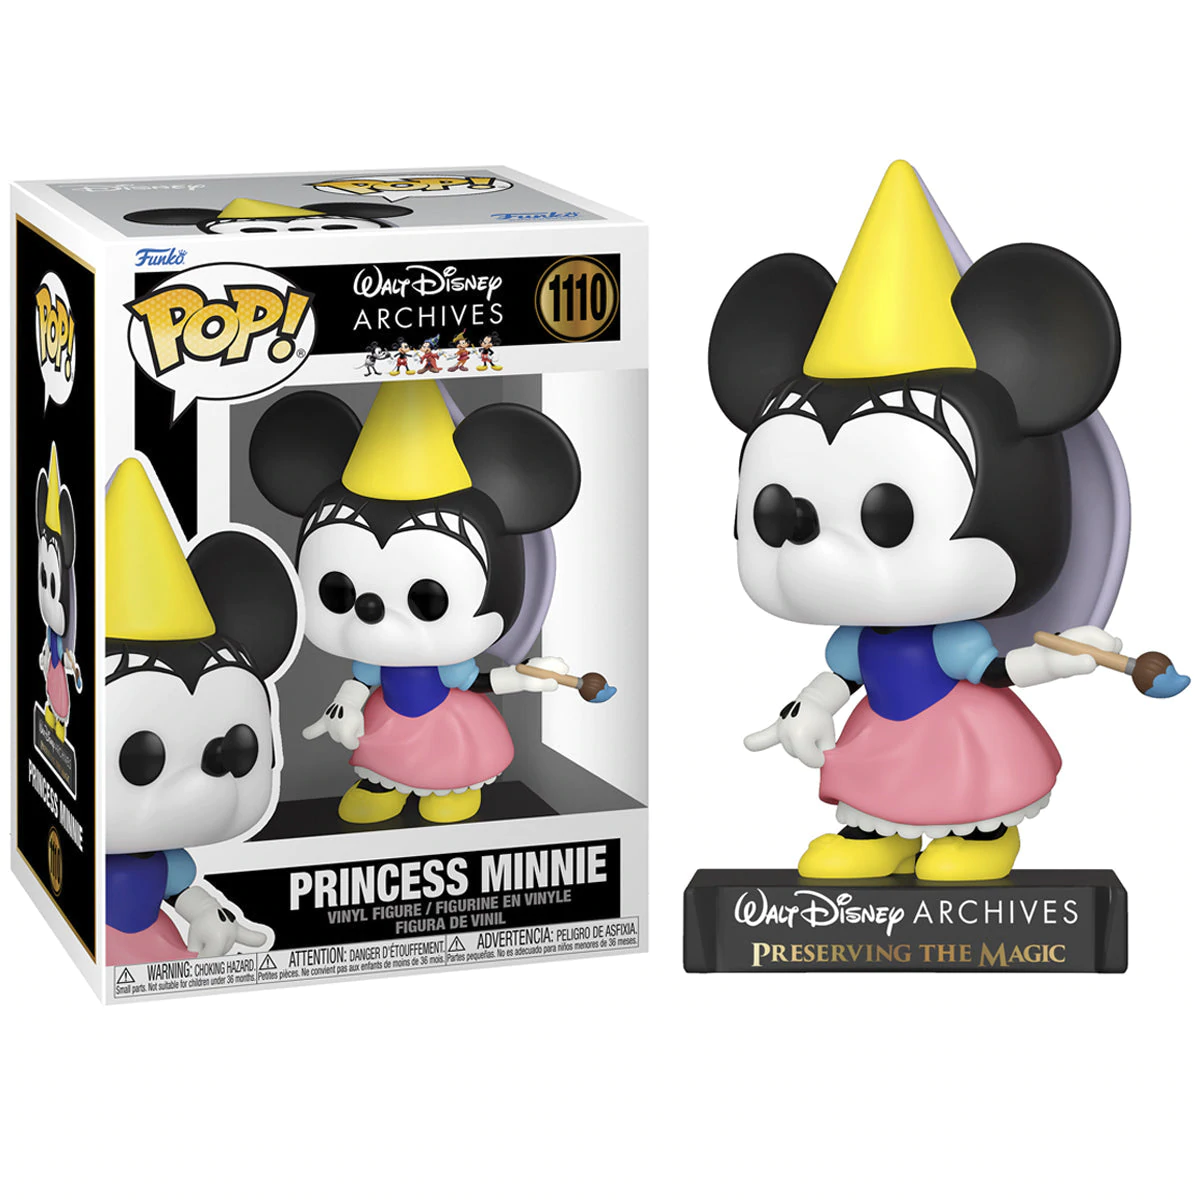 Funko Pop! Disney Archives: Princess Minnie '1938' (1110)